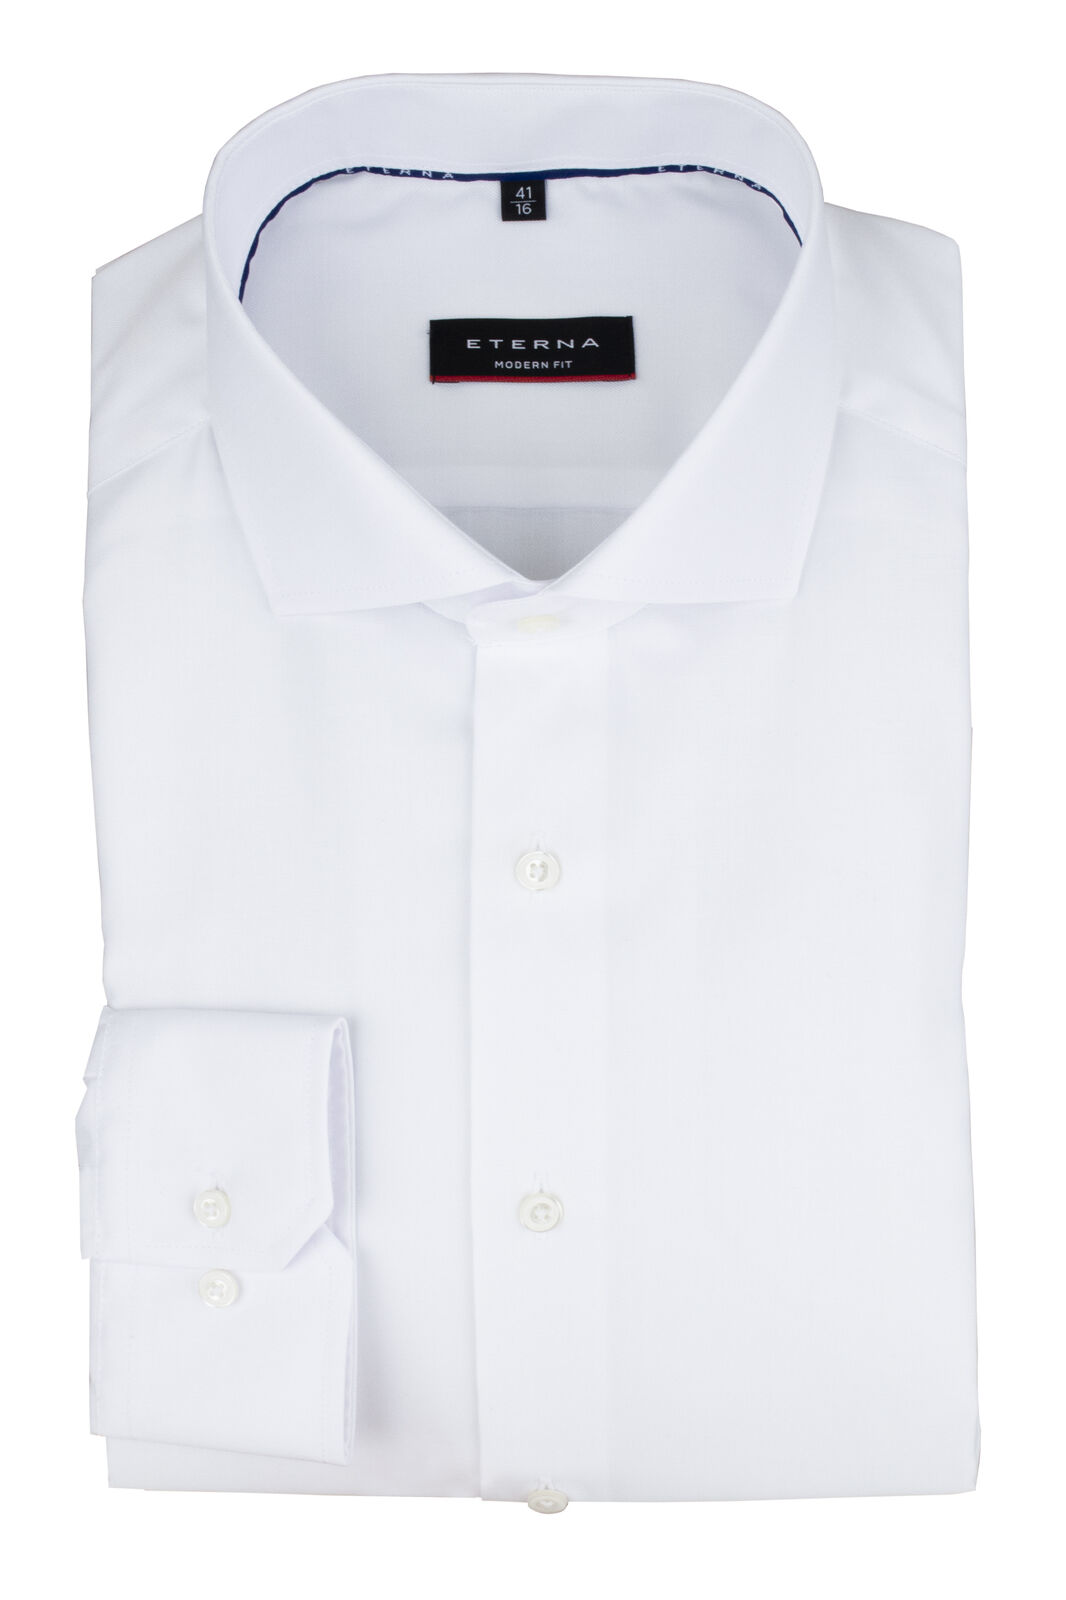 Eterna Long Sleeve Shirt White Cool Fit 3340-00-x17v - Modern Fit Shirt Men